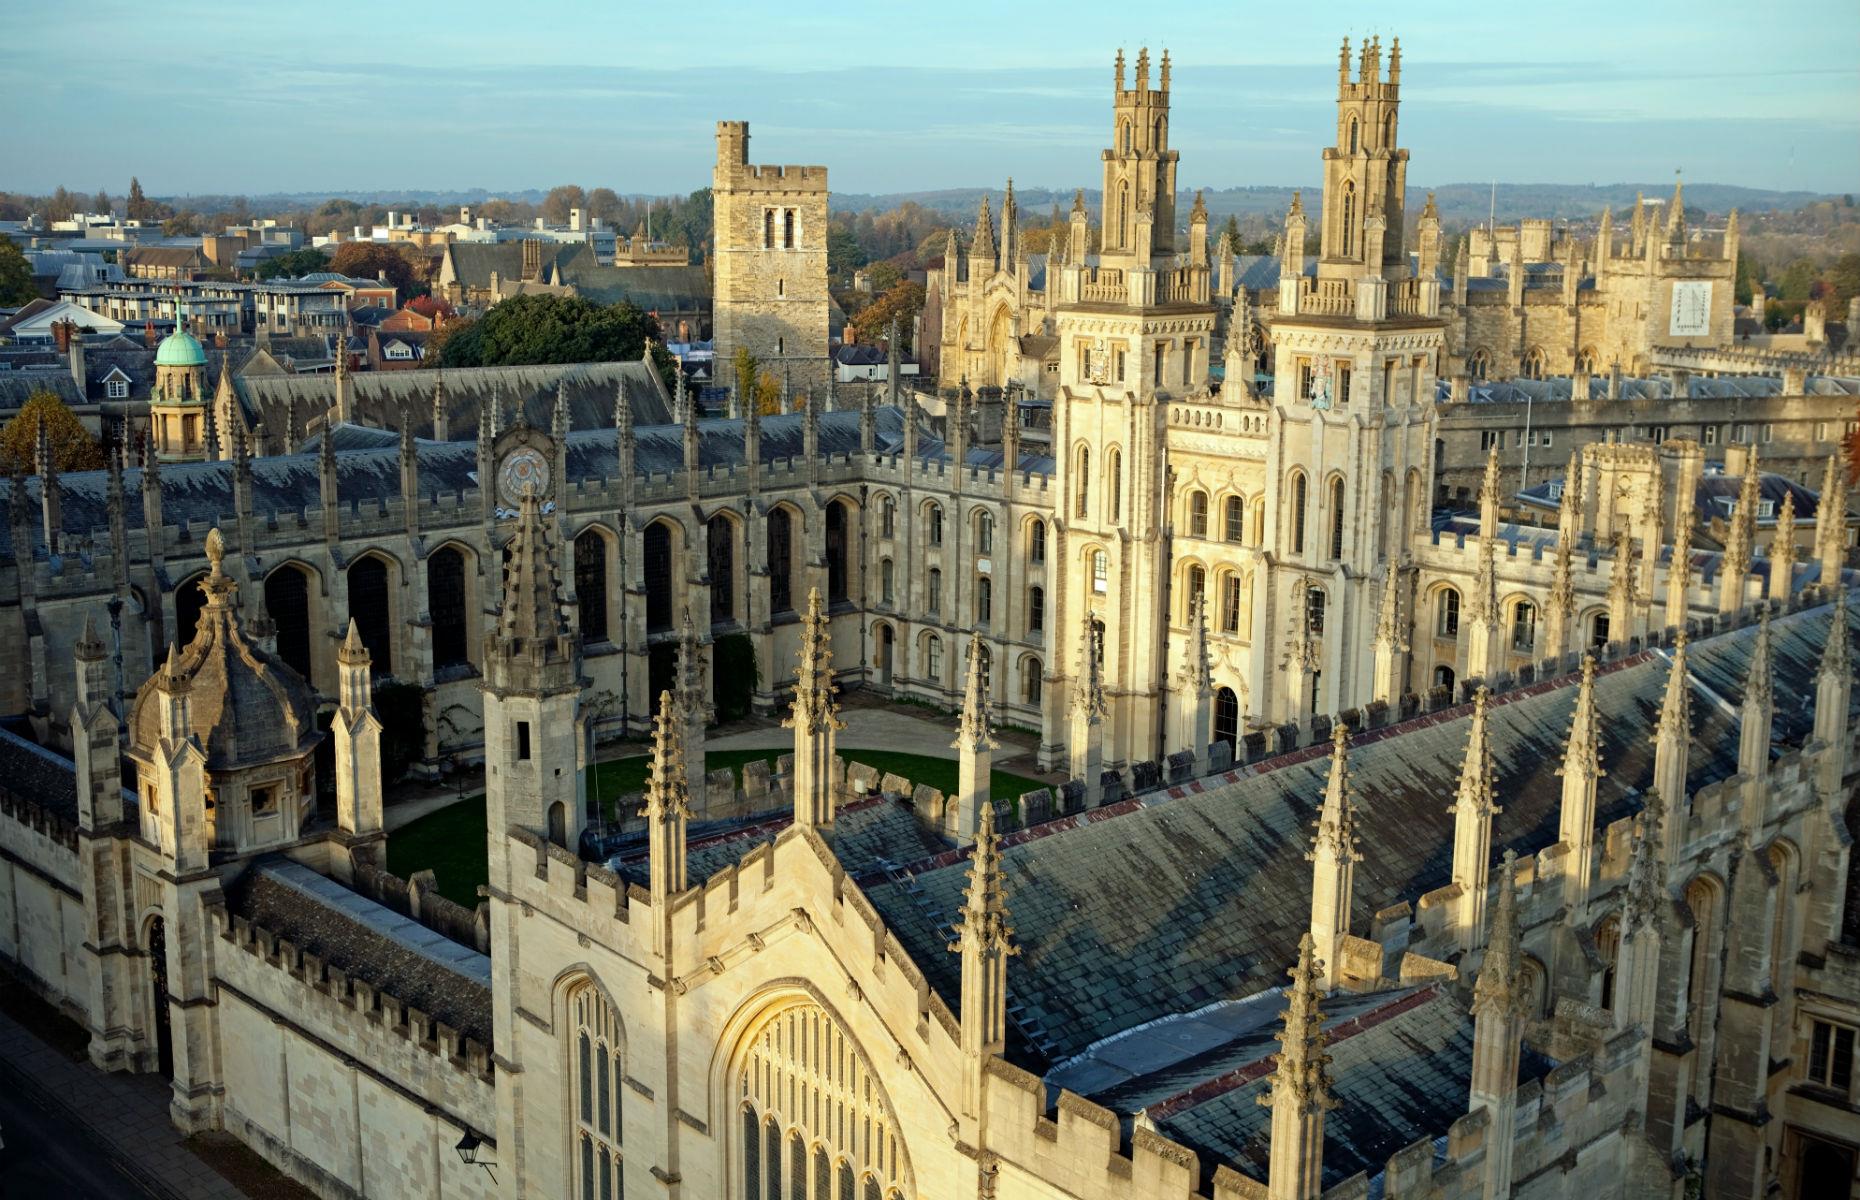 1) University of Oxford, UK